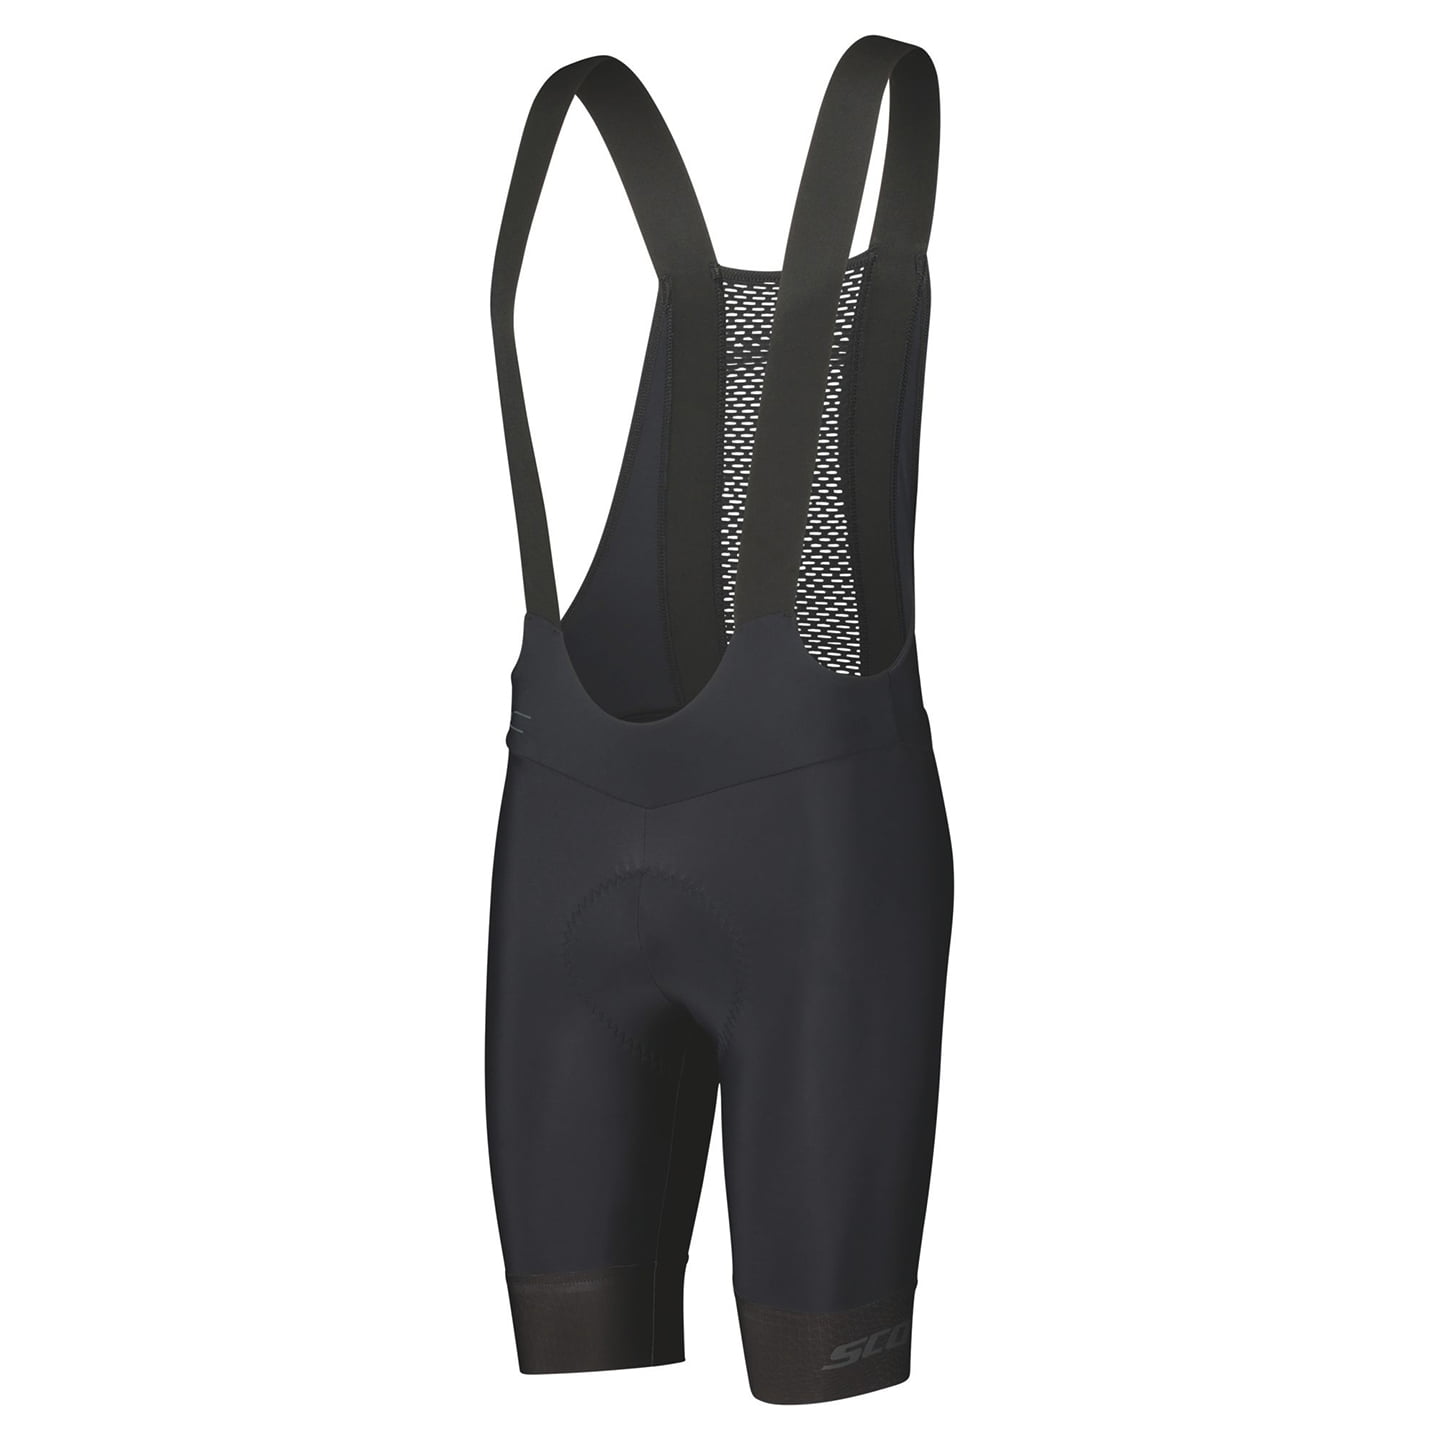 SCOTT RC Pro +++ Bib Shorts Bib Shorts, for men, size L, Cycle shorts, Cycling clothing